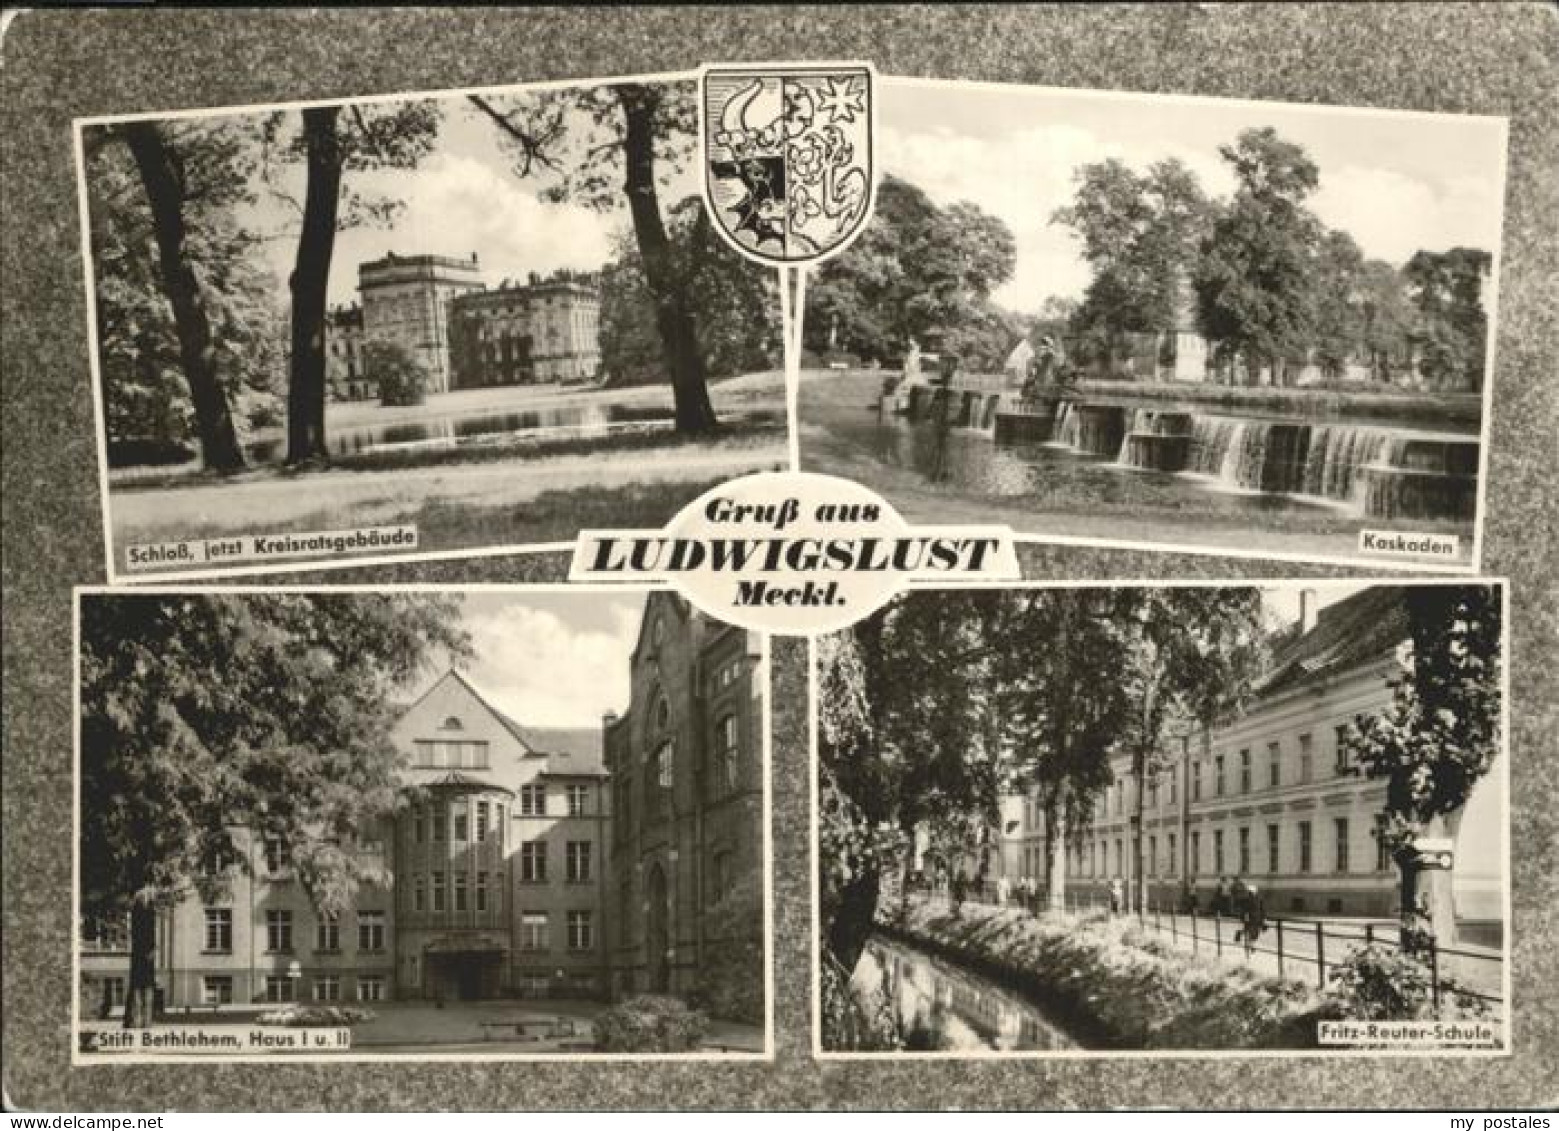 41261917 Ludwigslust Wappen Kaskaden Fritz Reuter Schule Stift Bethlehem Haus Sc - Ludwigslust